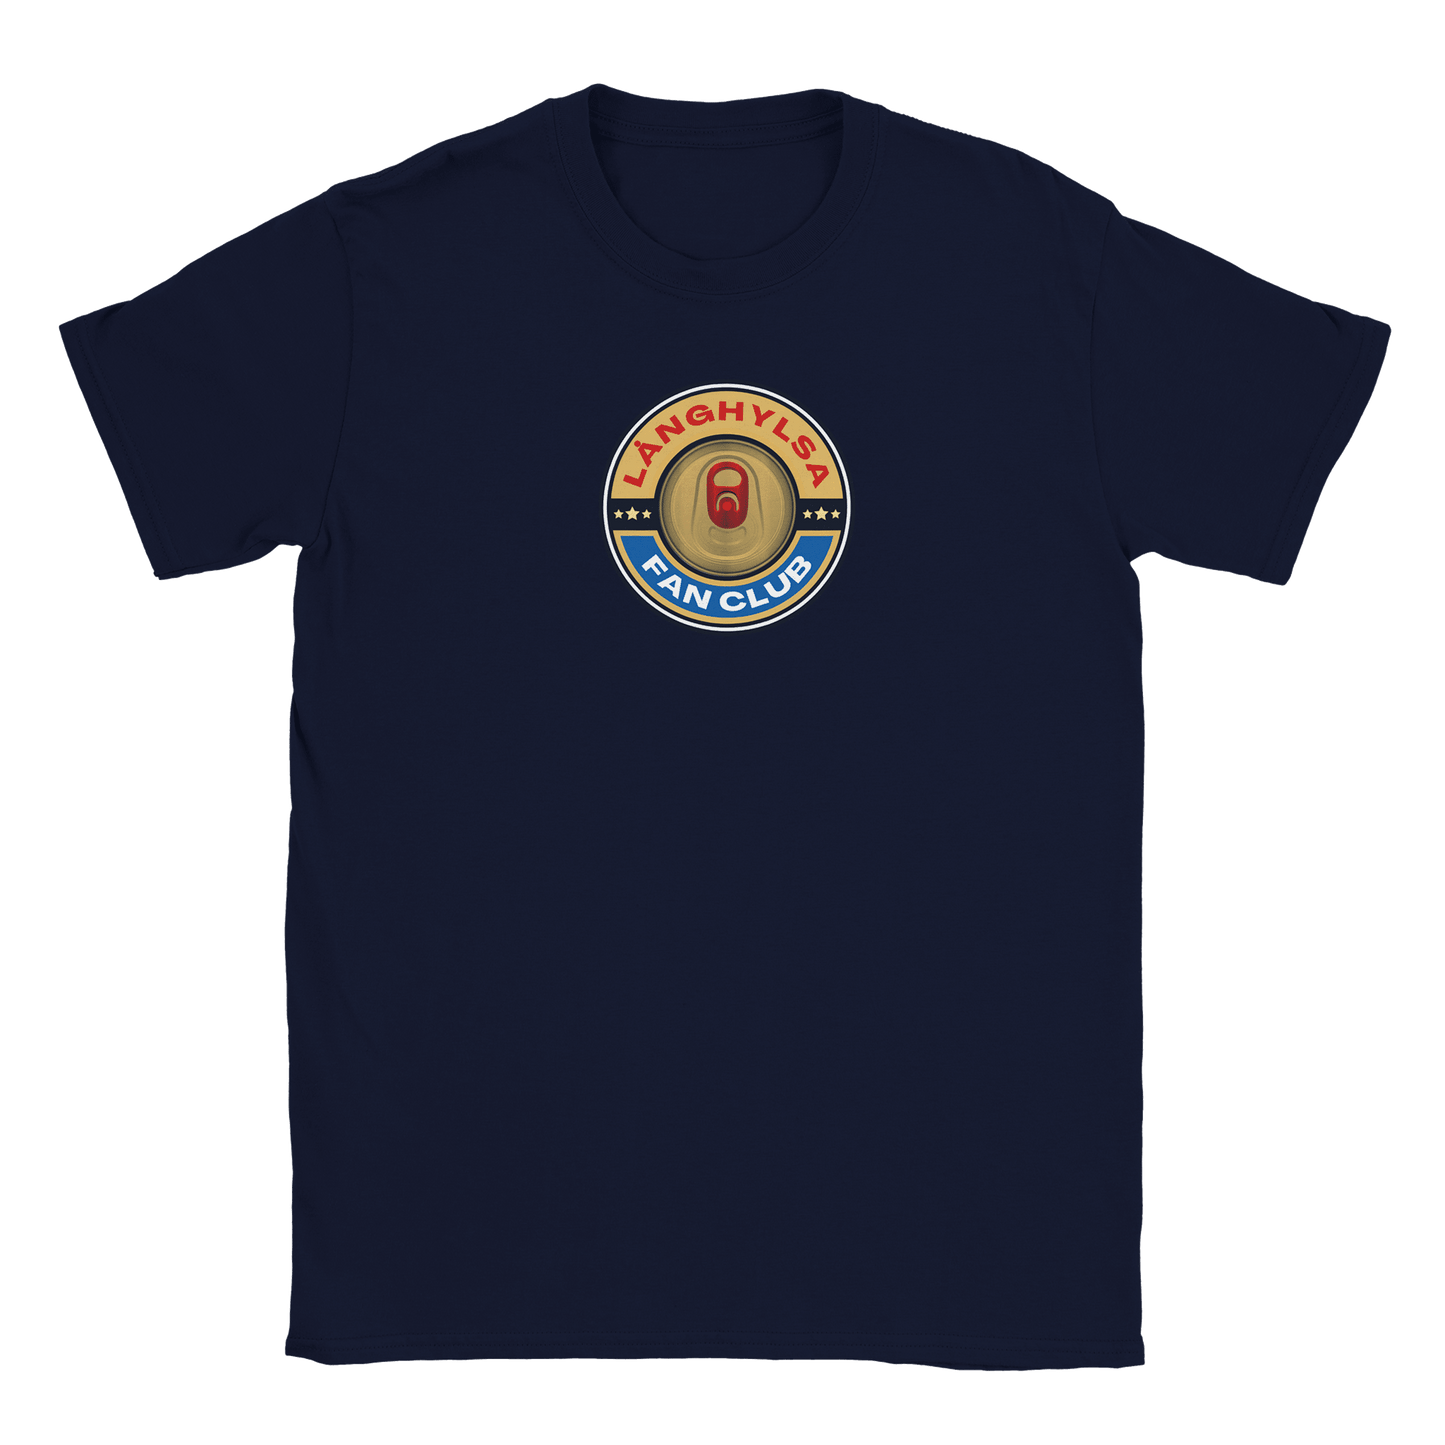 Långhylsa Fan Club Norrland Edition - T-shirt Navy